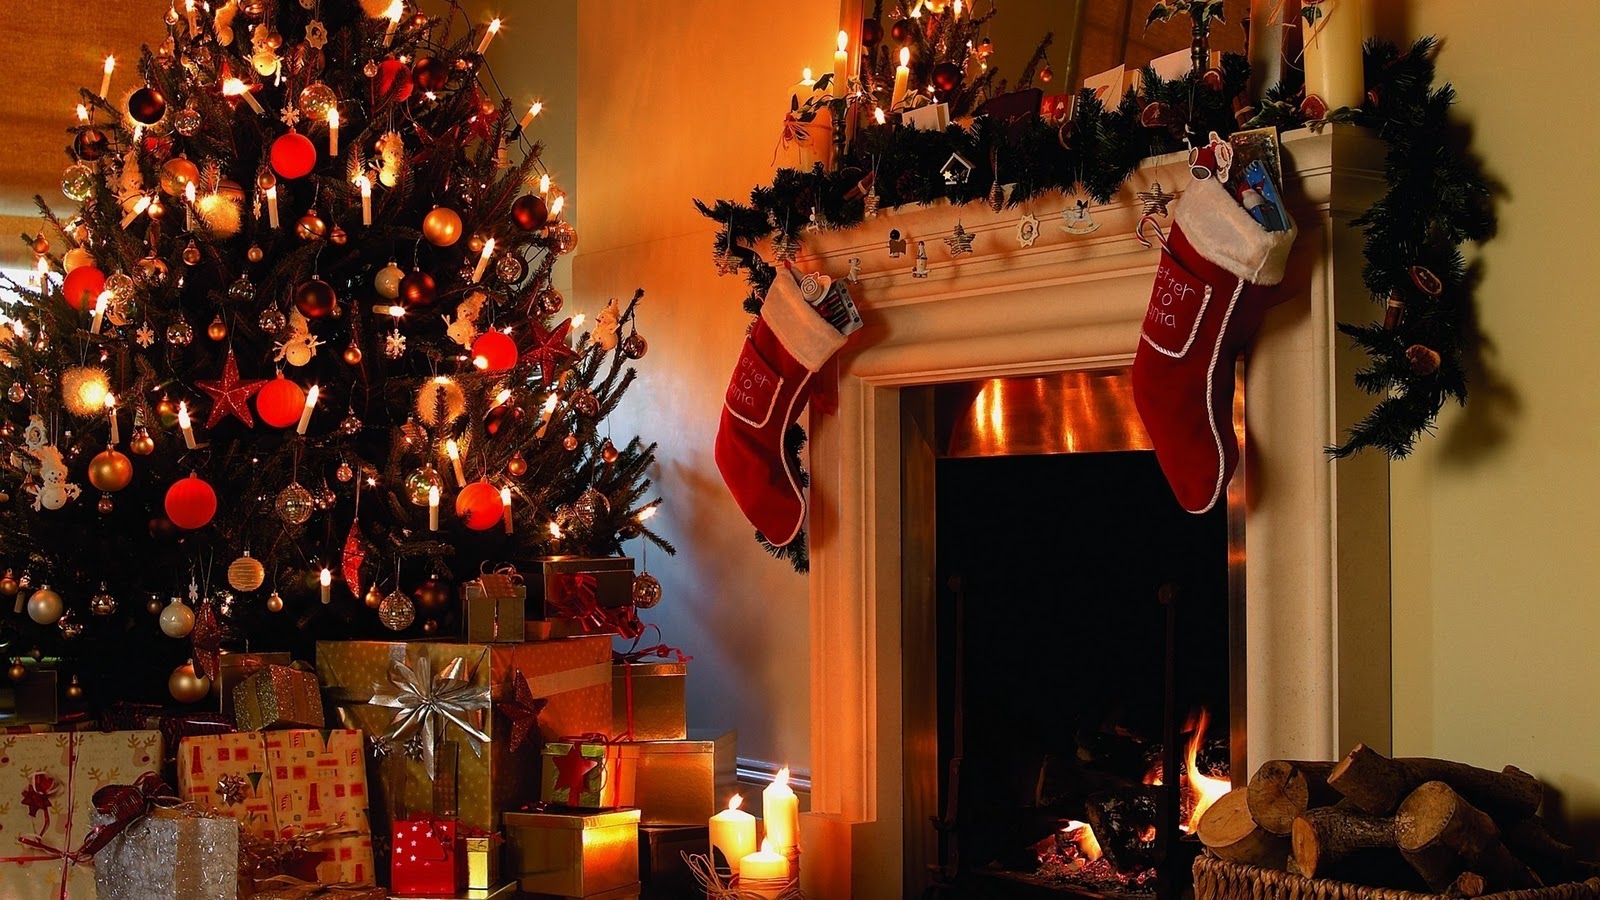 Christmas Tree And Fireplace Wallpaper Desktop